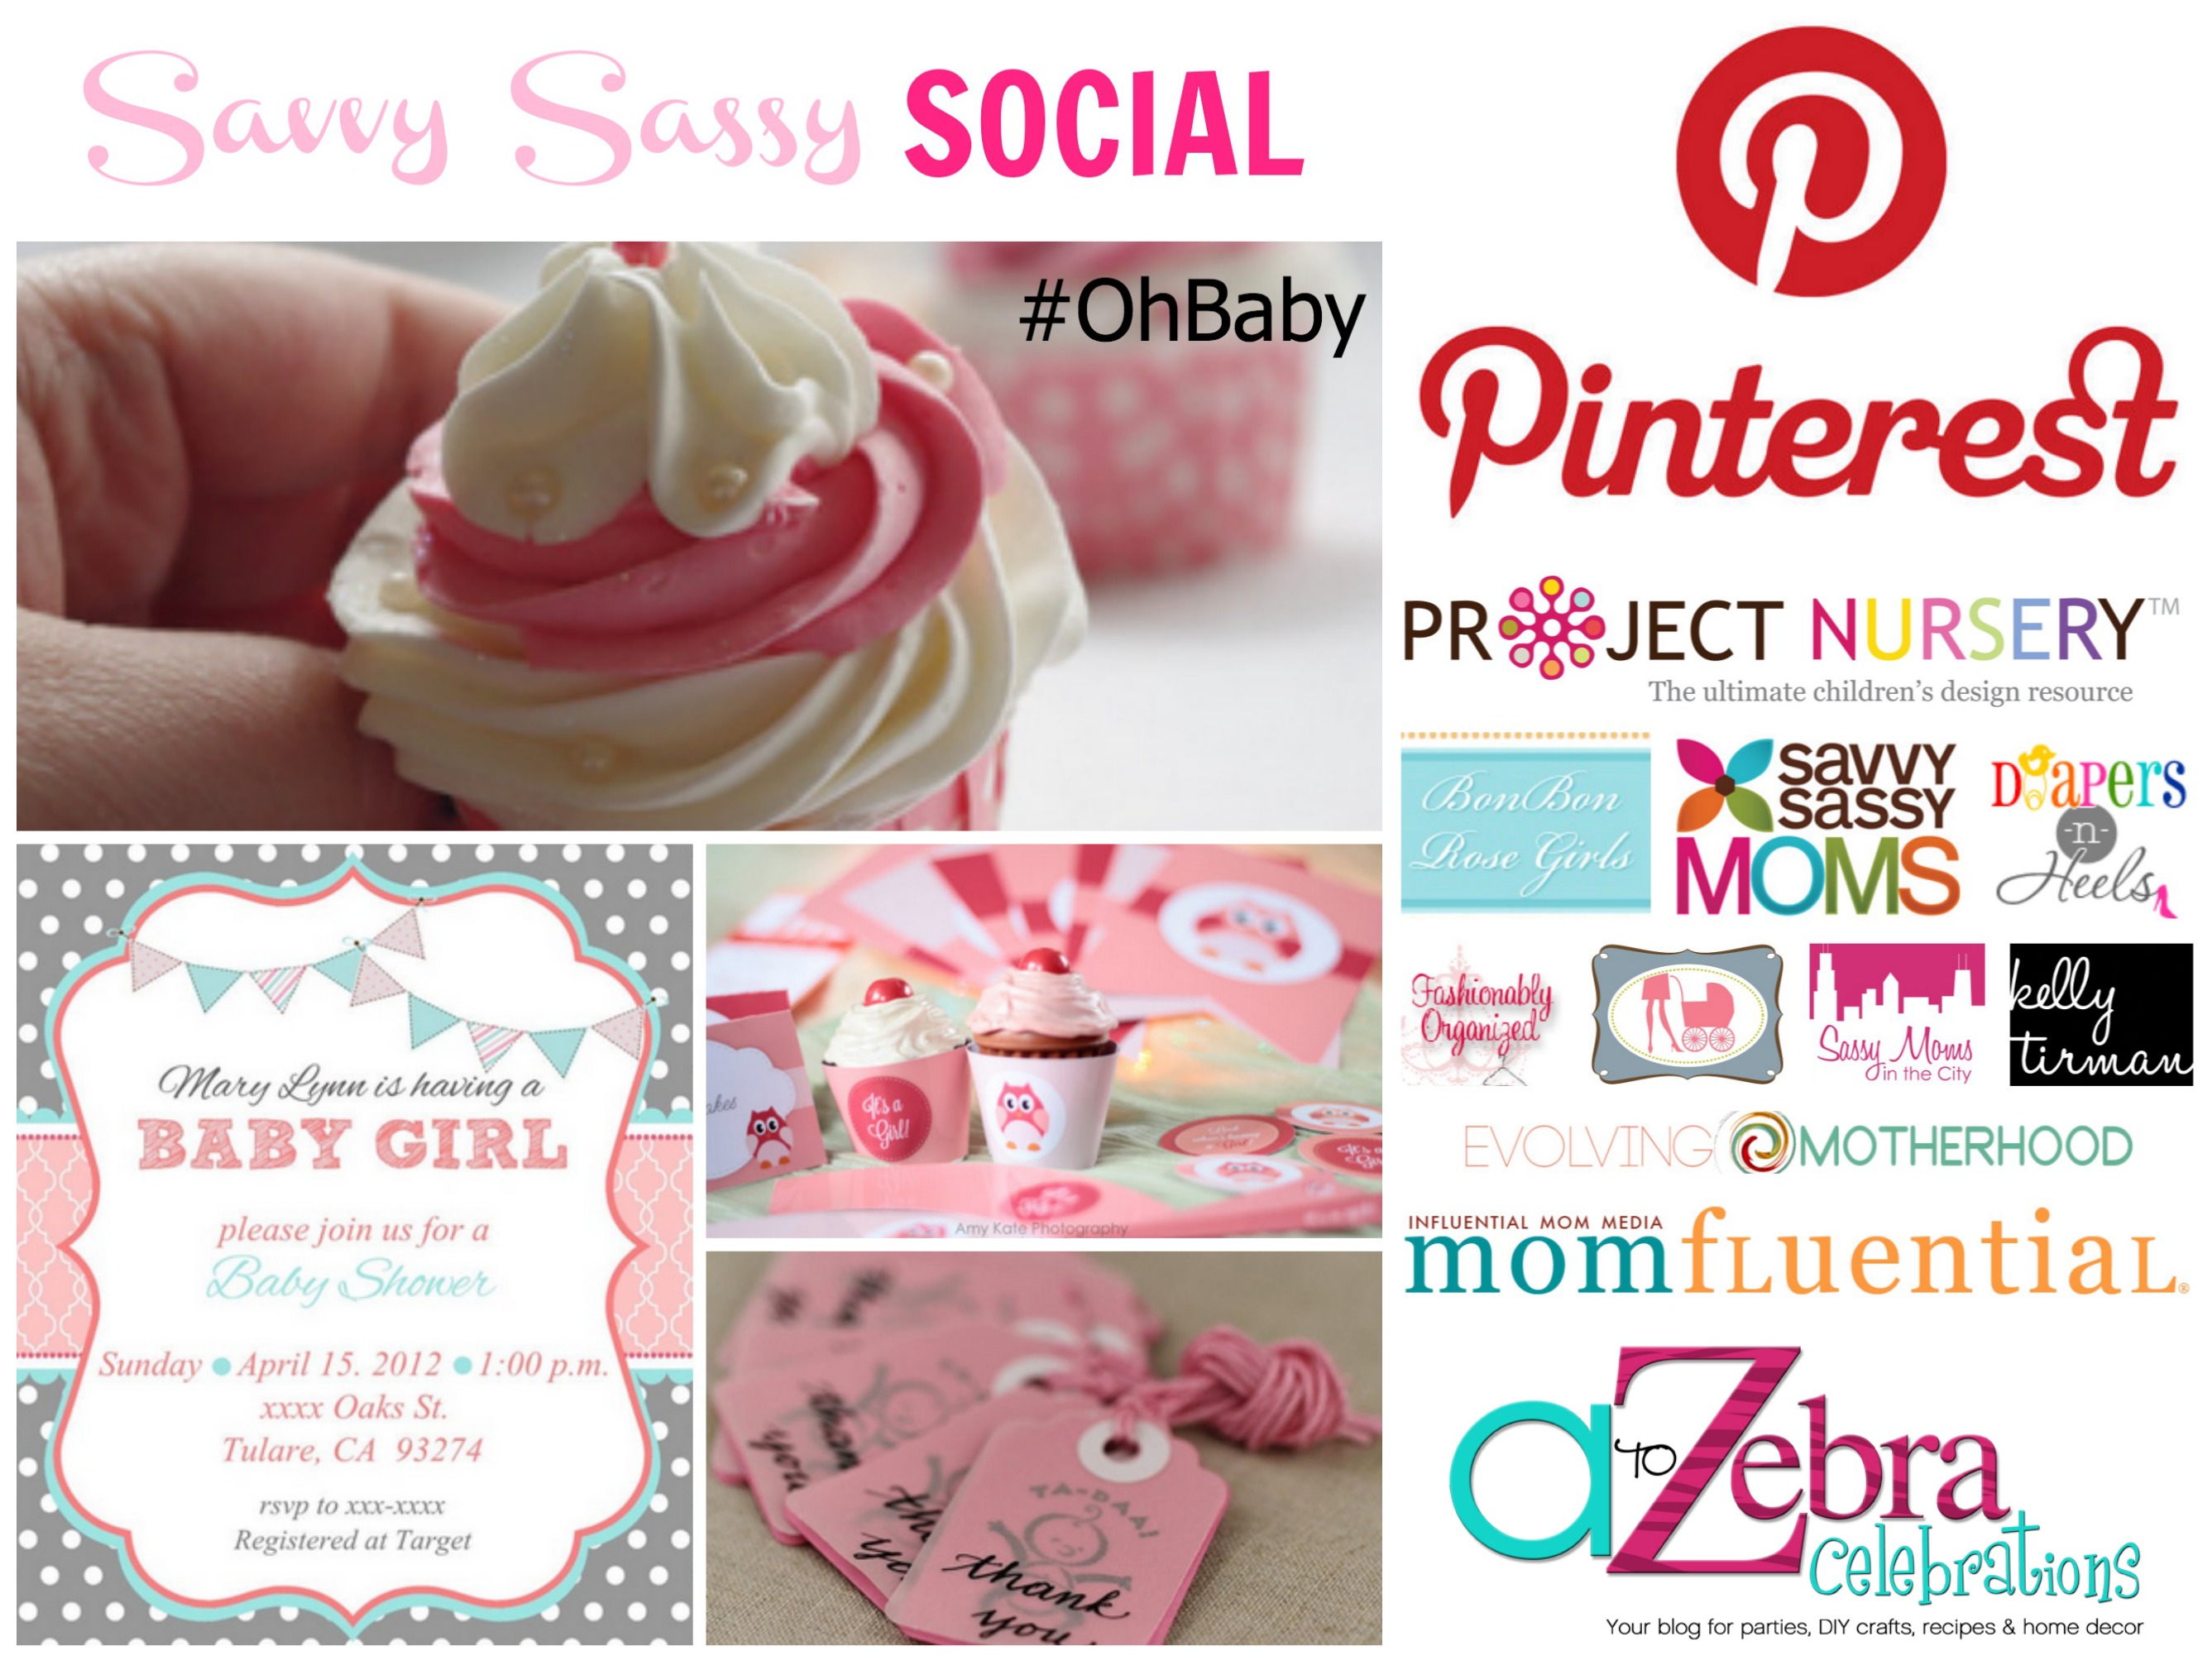 Oh Baby! Pinterest SOCIAL It's a Girl! - Savvy Sassy Moms